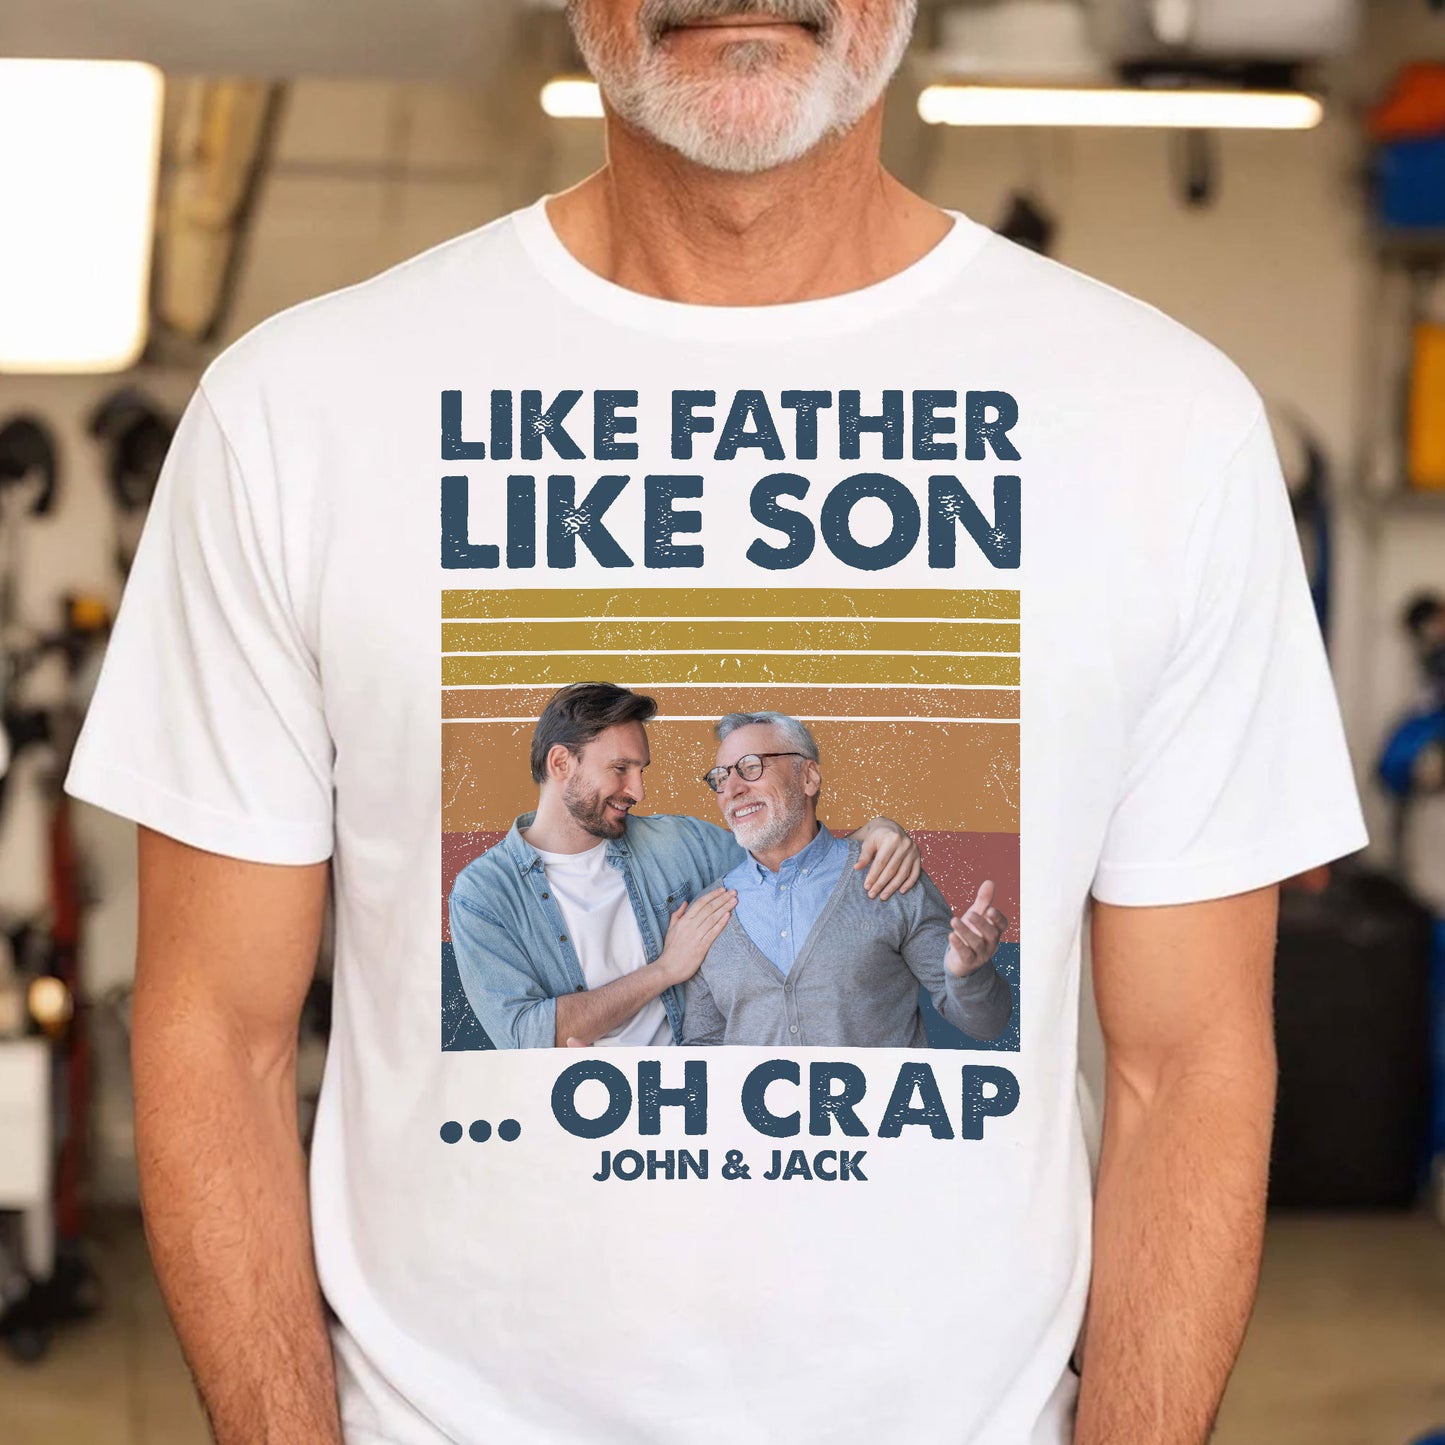 Like Father Like Son - Personalized Photo Shirt